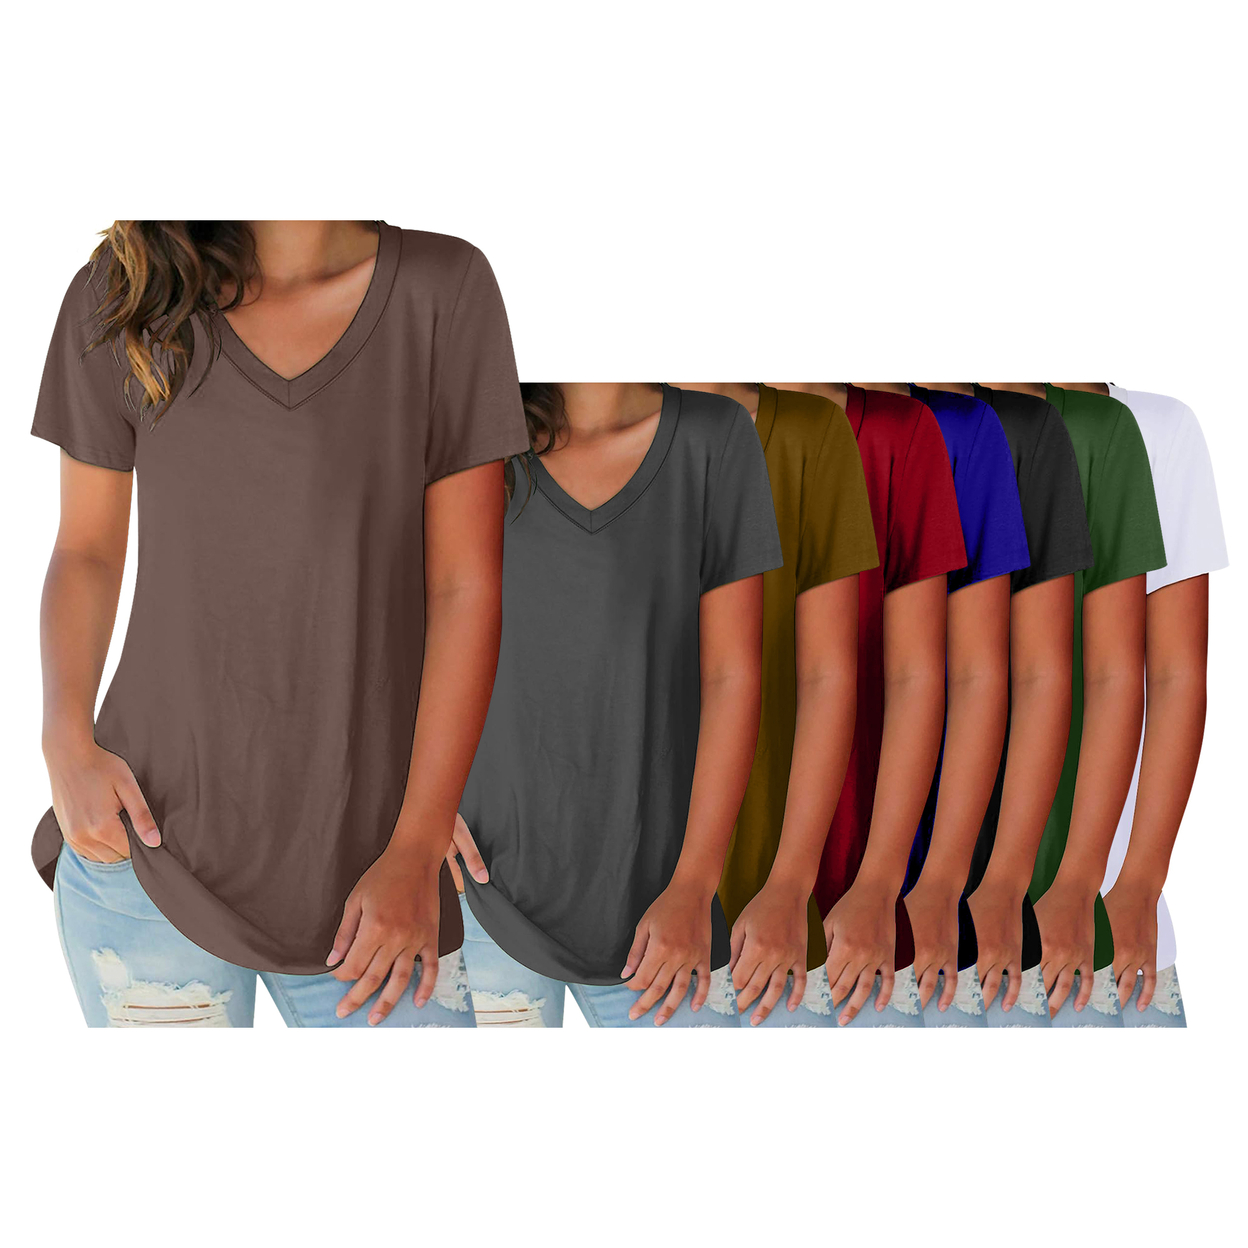 Women's Ultra-Soft Smooth Cotton Blend Basic V-Neck Short Sleeve Shirts - Navy, Large